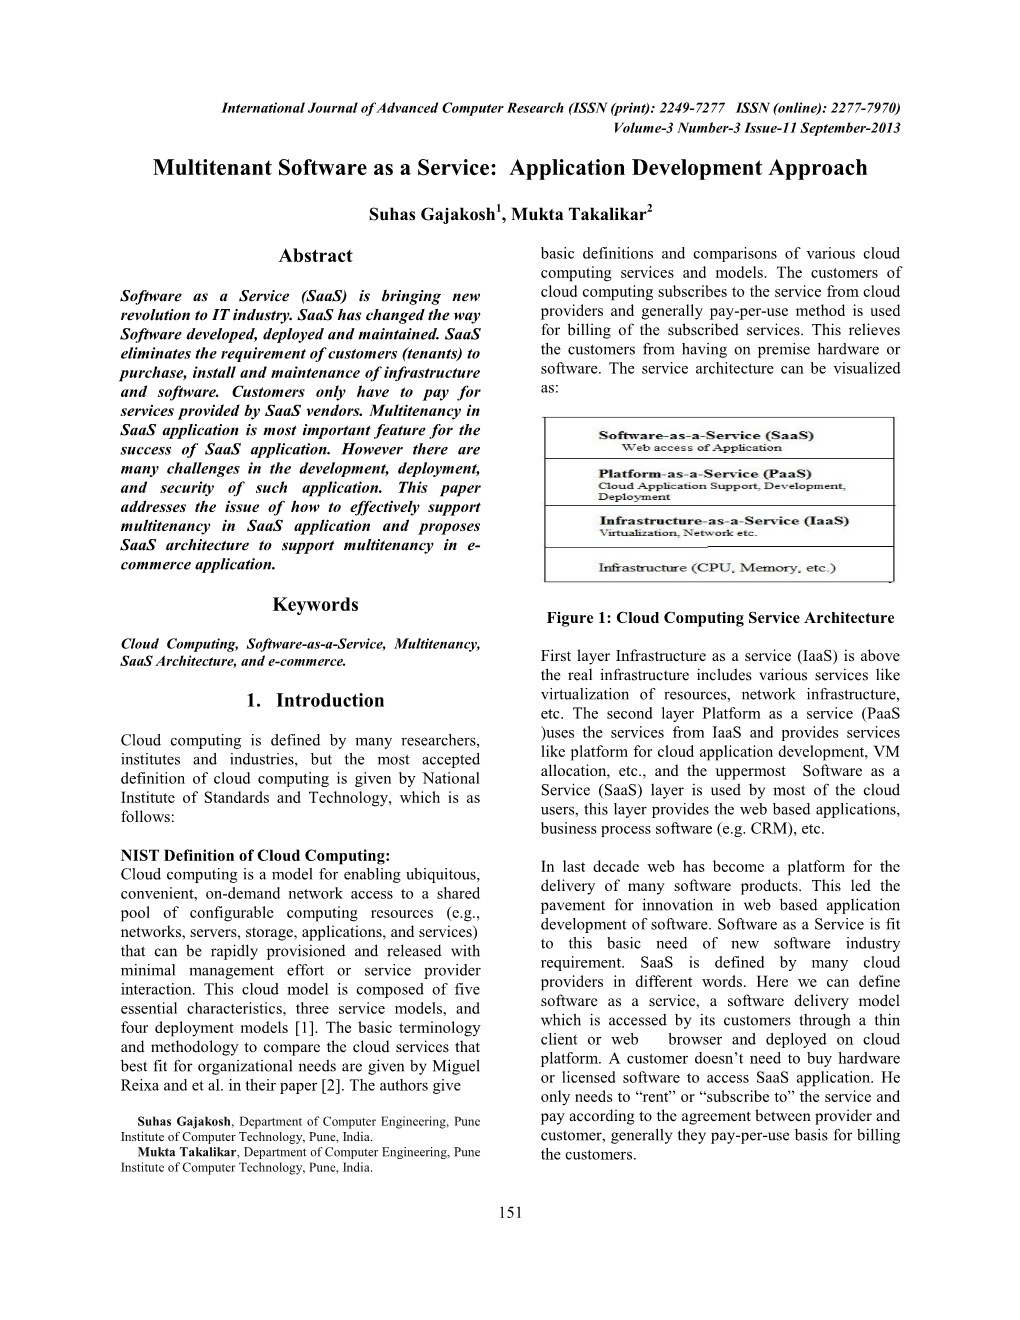 Multitenant Software As a Service: Application Development Approach